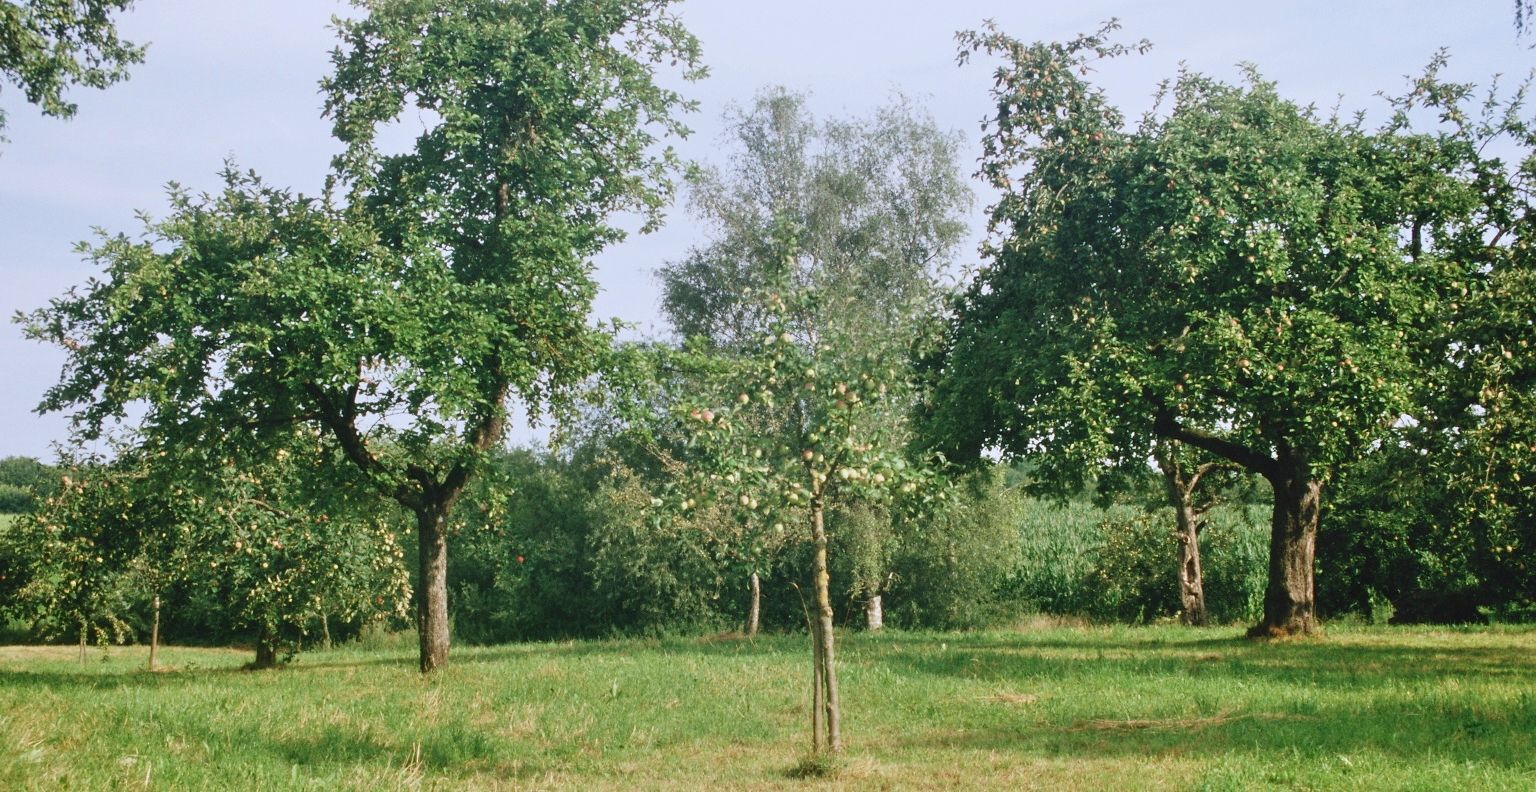 Streuobstwiese mit Äpfeln an den Bäumen